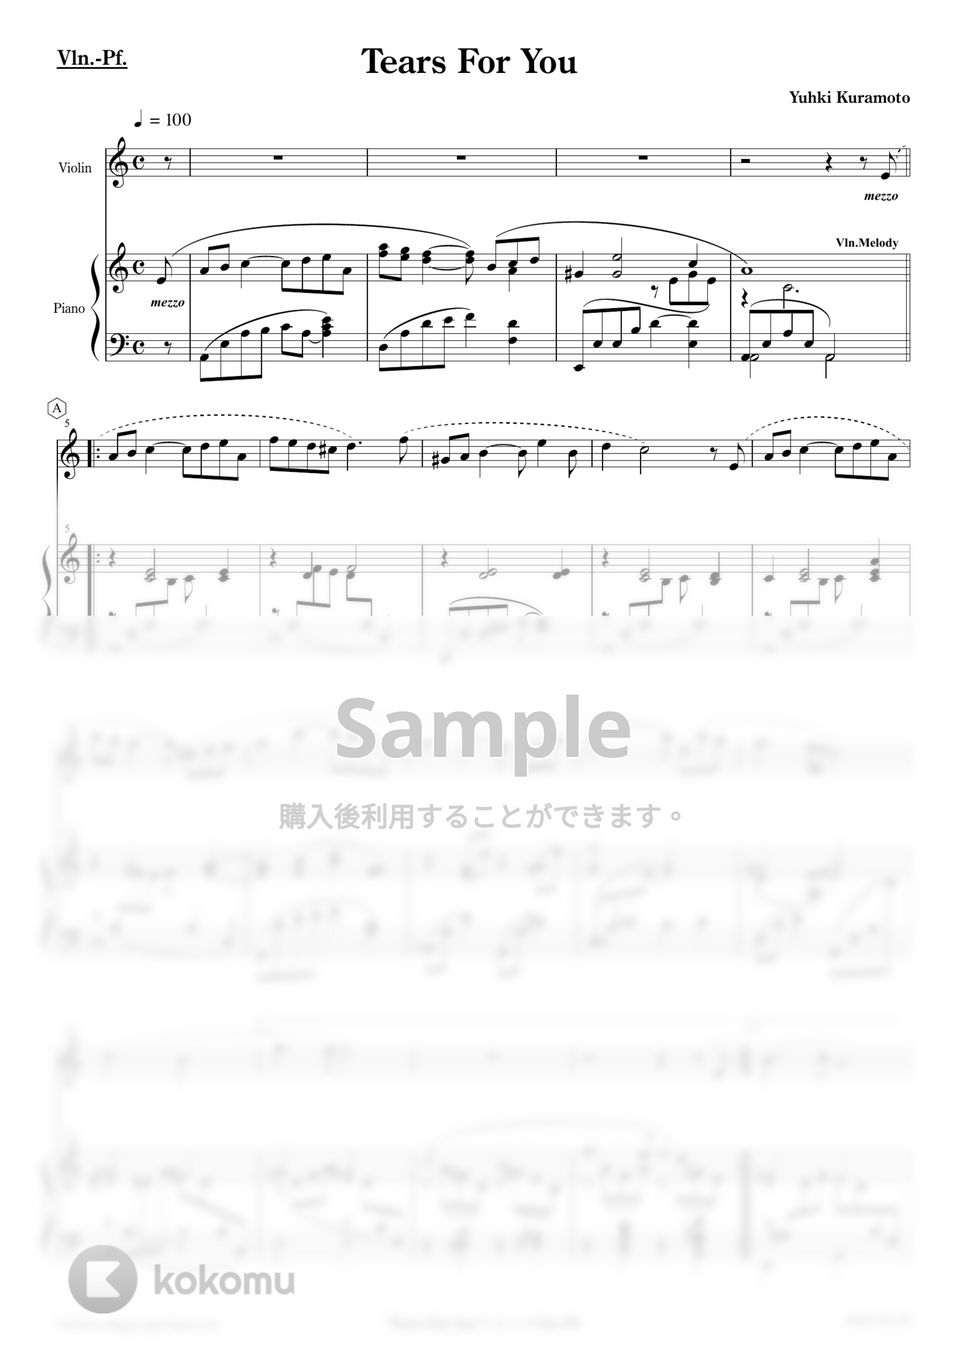 Yuhki Kuramoto - Tears For You (Vln-Pf) by Yuhki Kuramoto